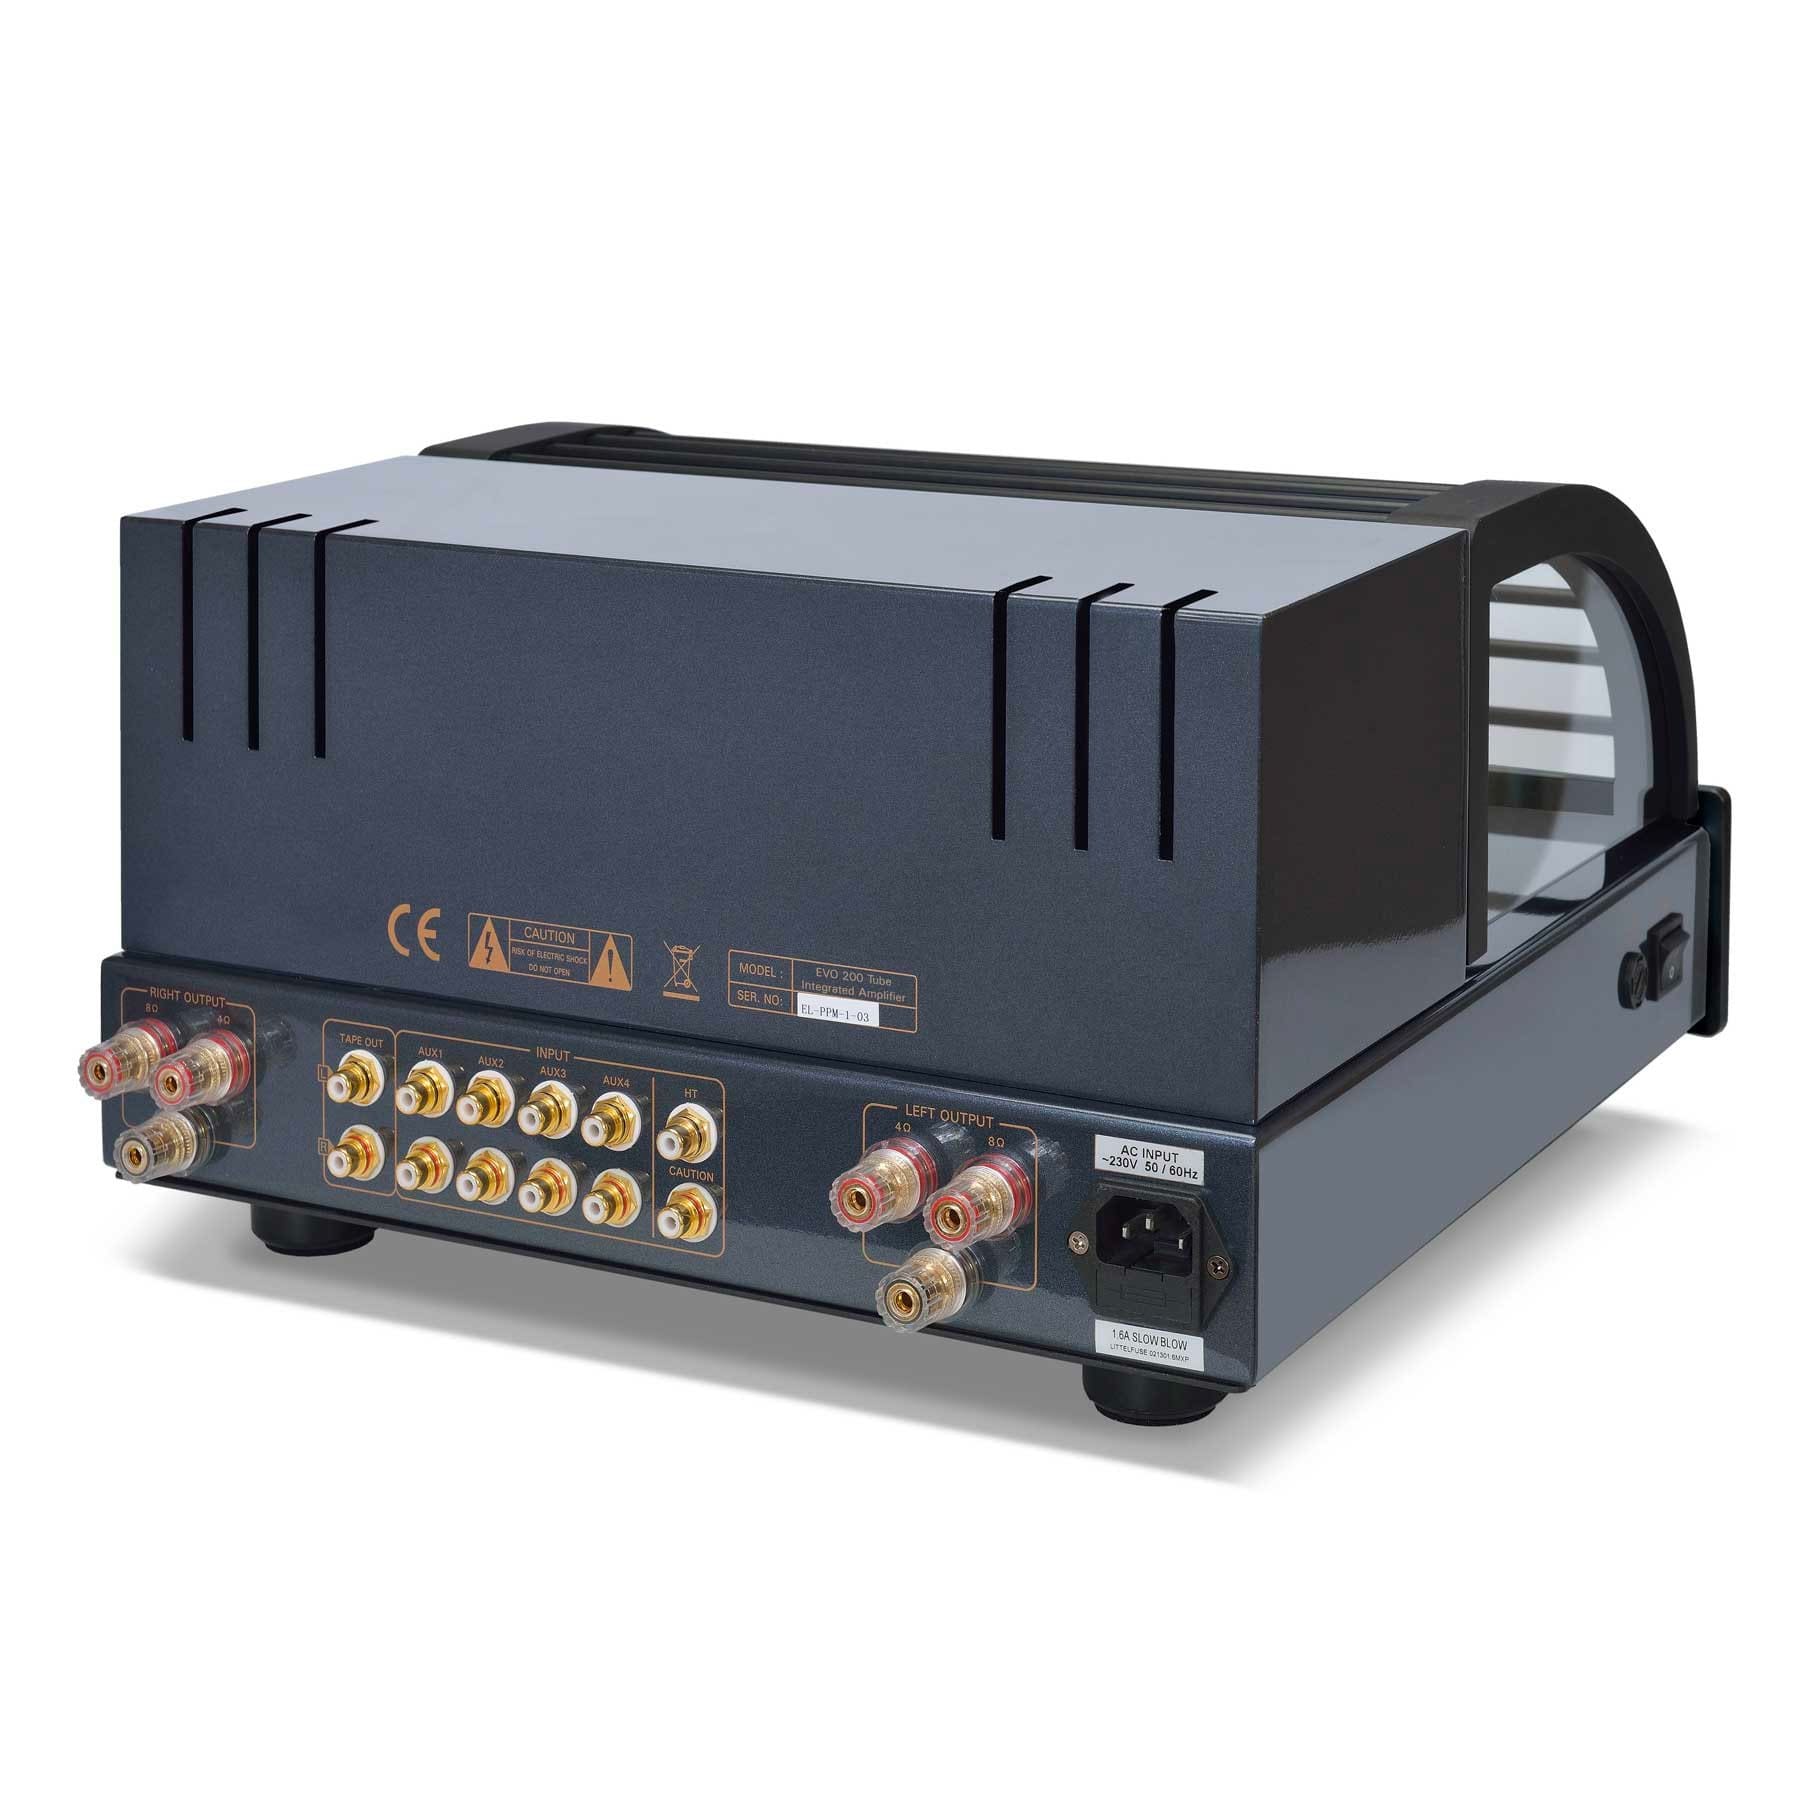 PrimaLuna EVO 200 Integrated Amplifier